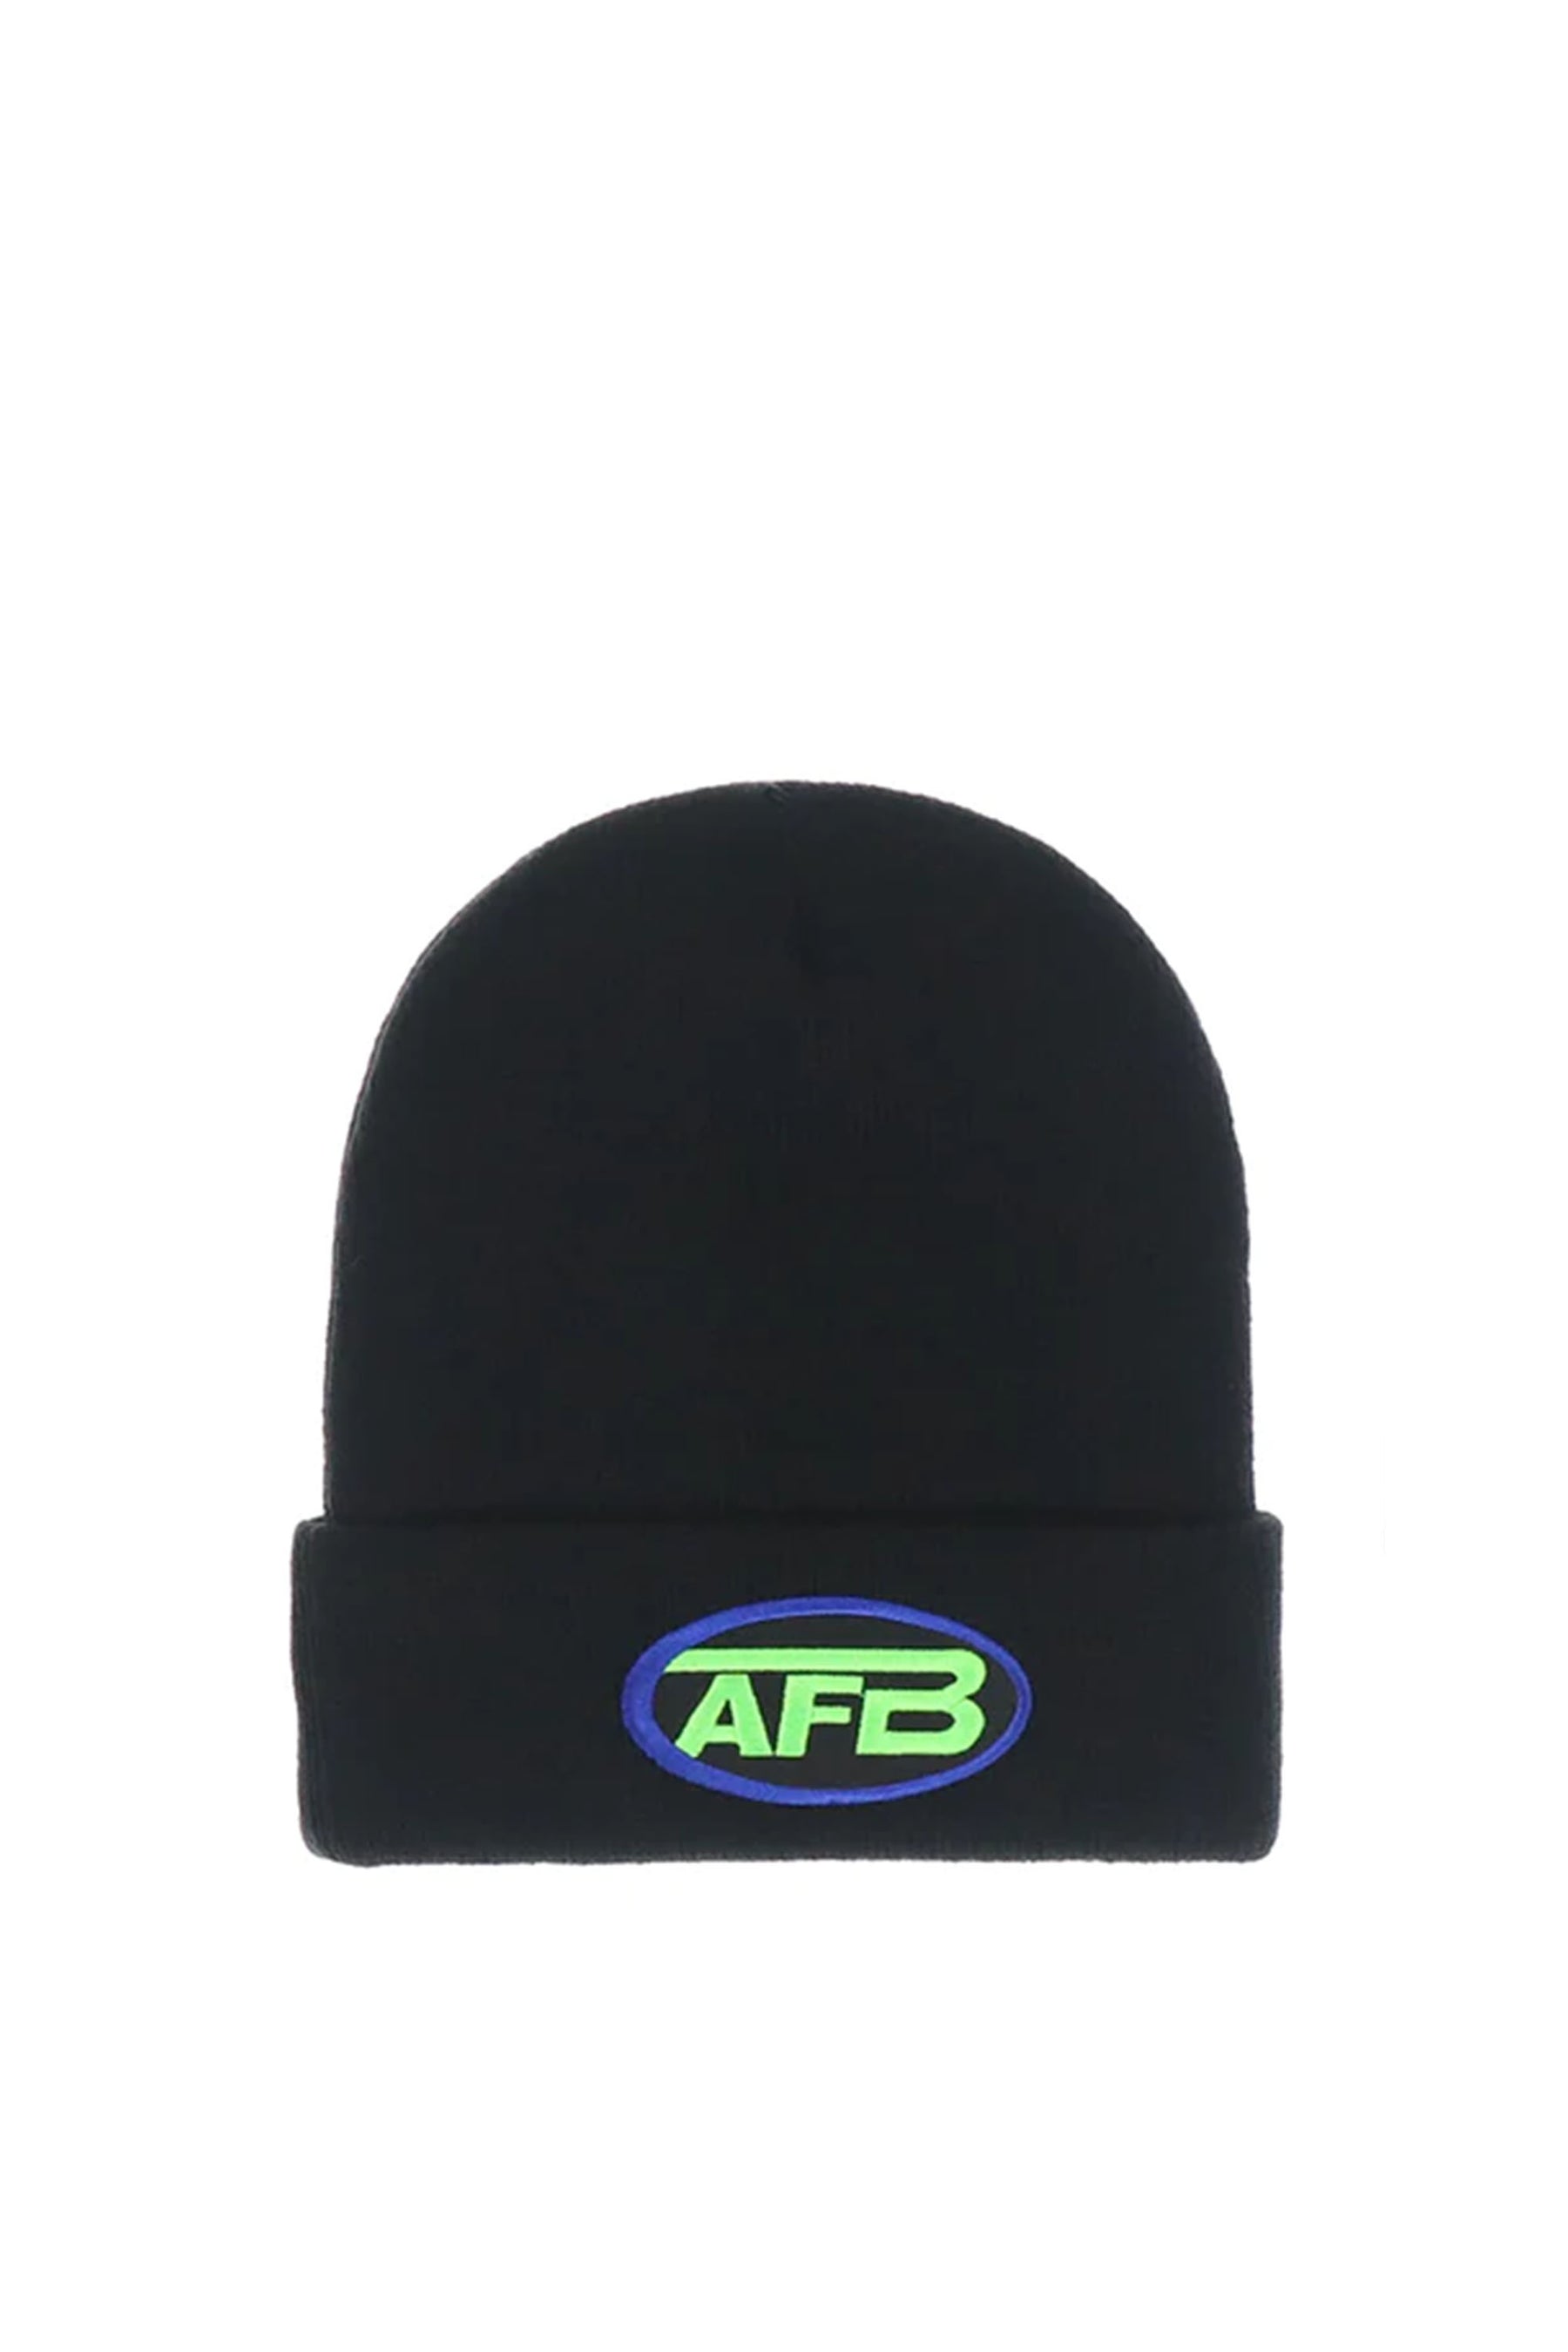 AFB ニット帽 - ニットキャップ/ビーニー